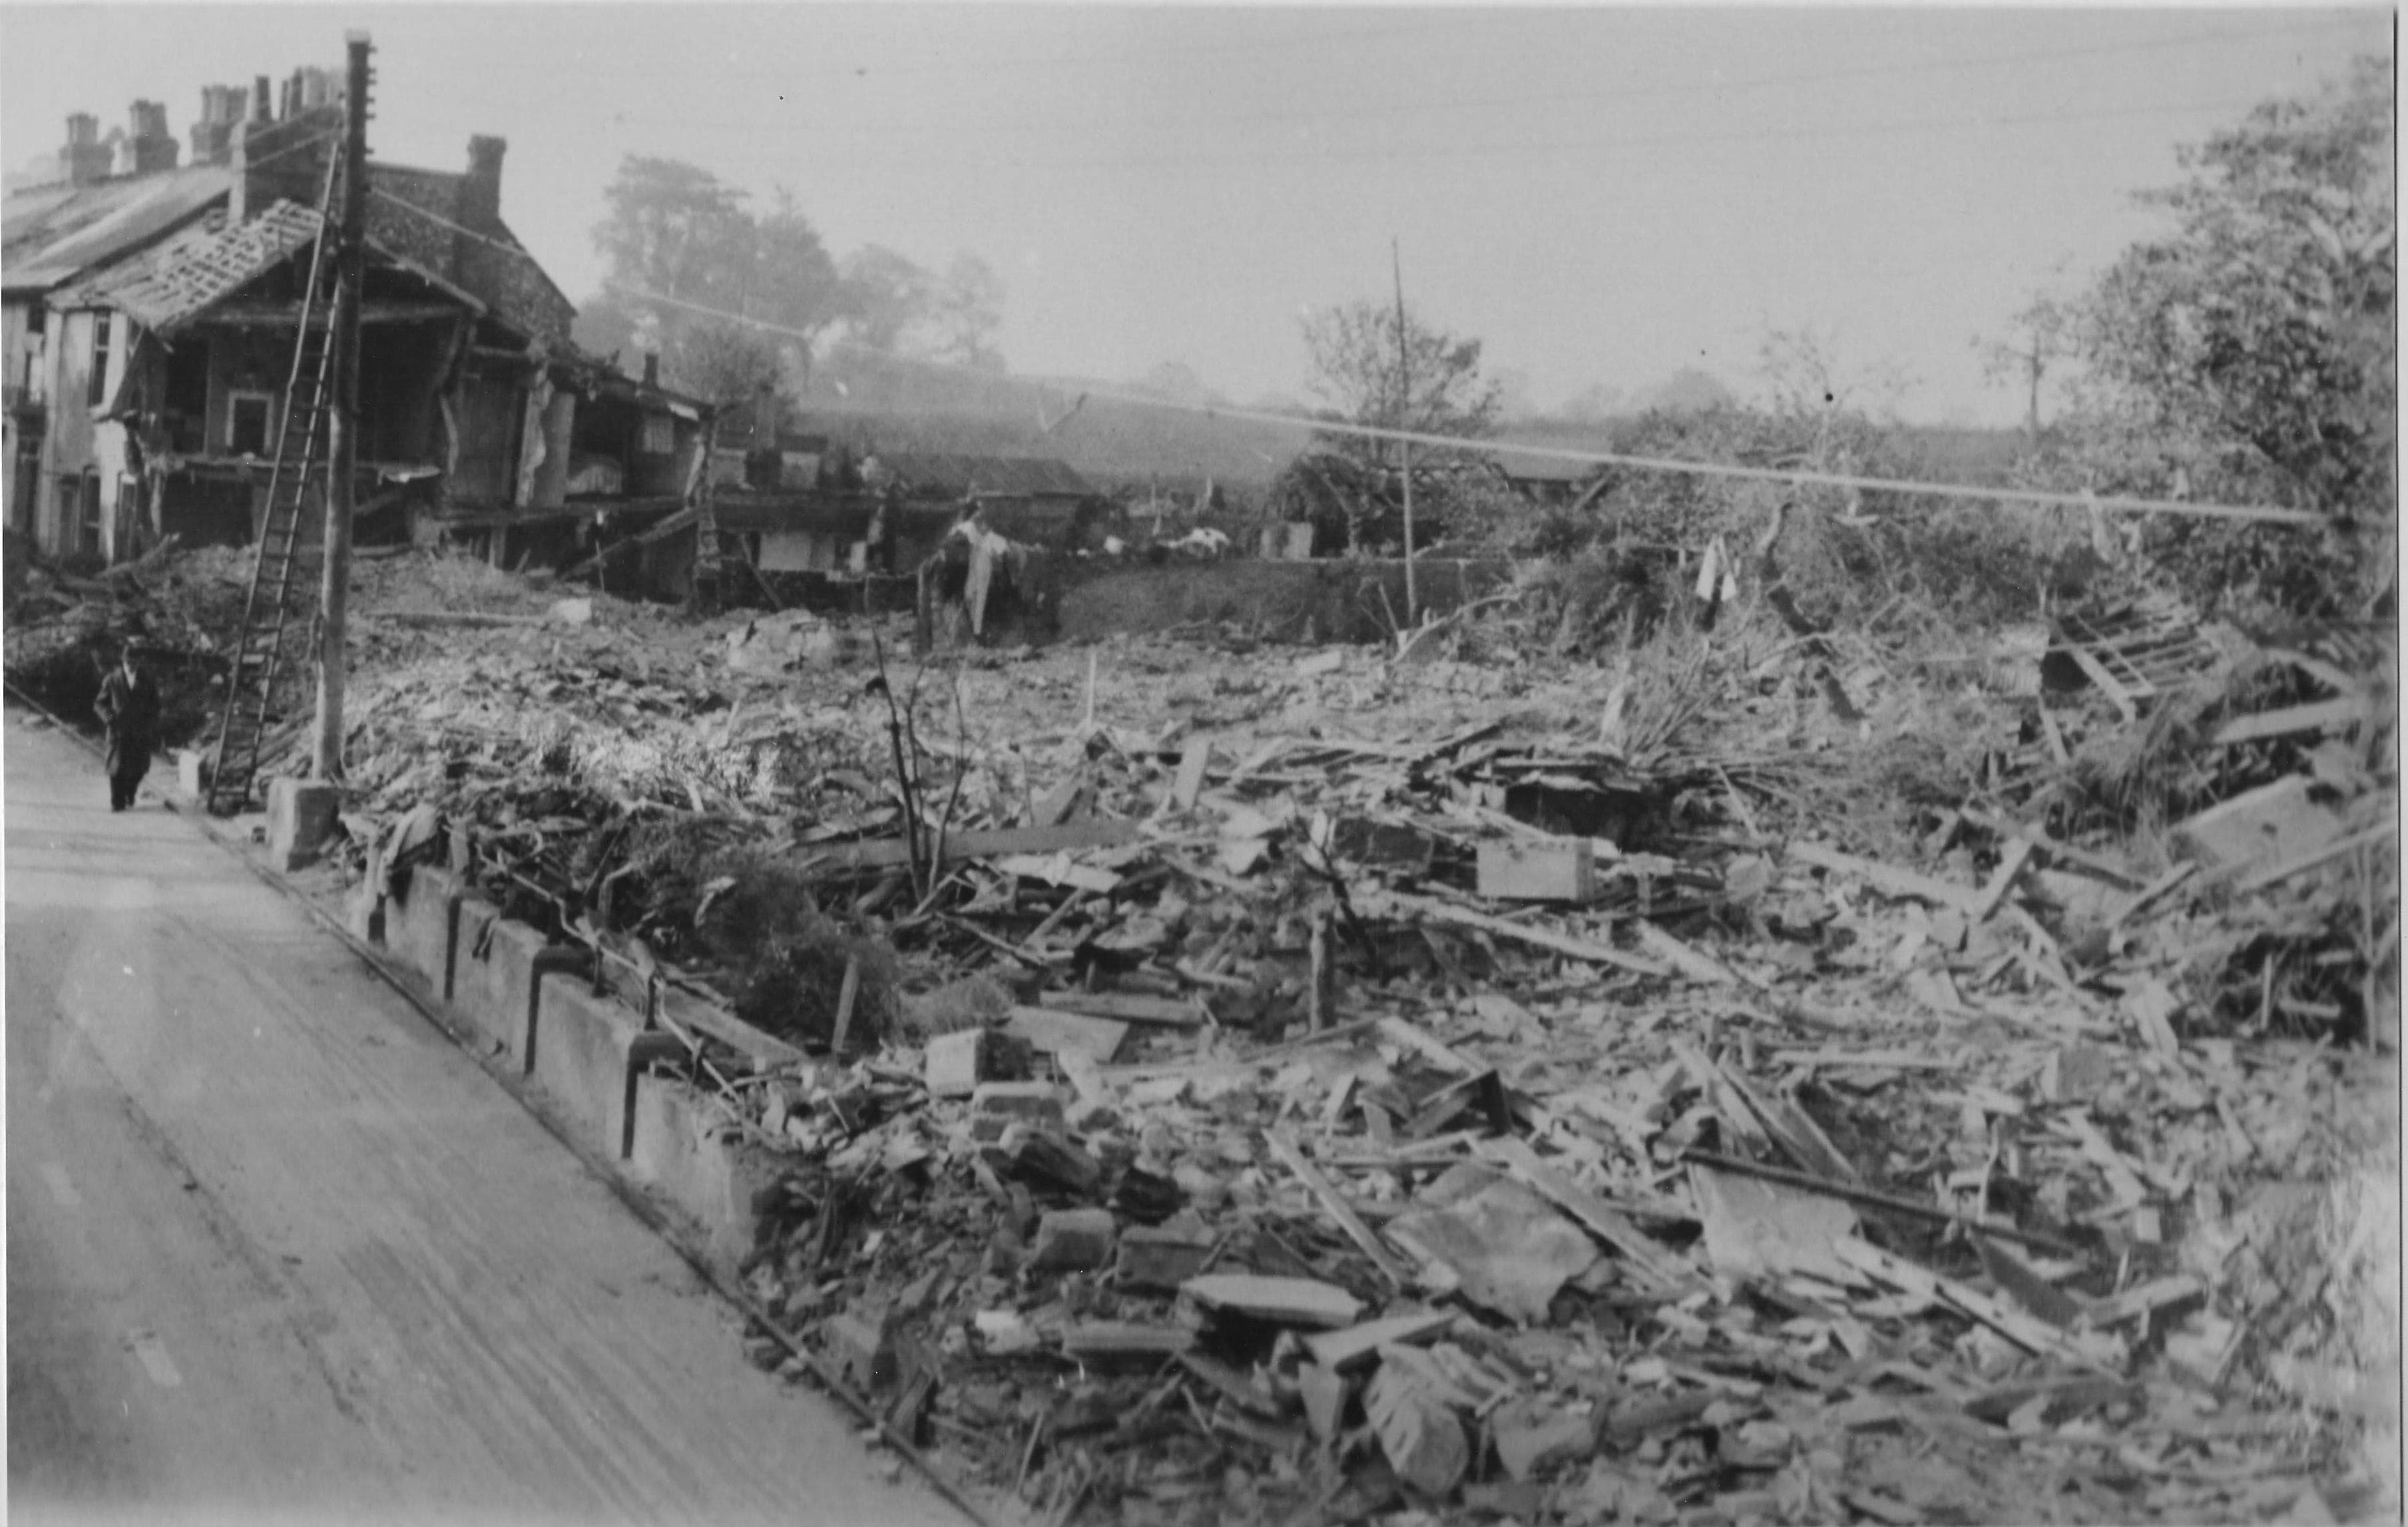 Wickham Market Bomb Damage 19 Oct 1942 looking south min